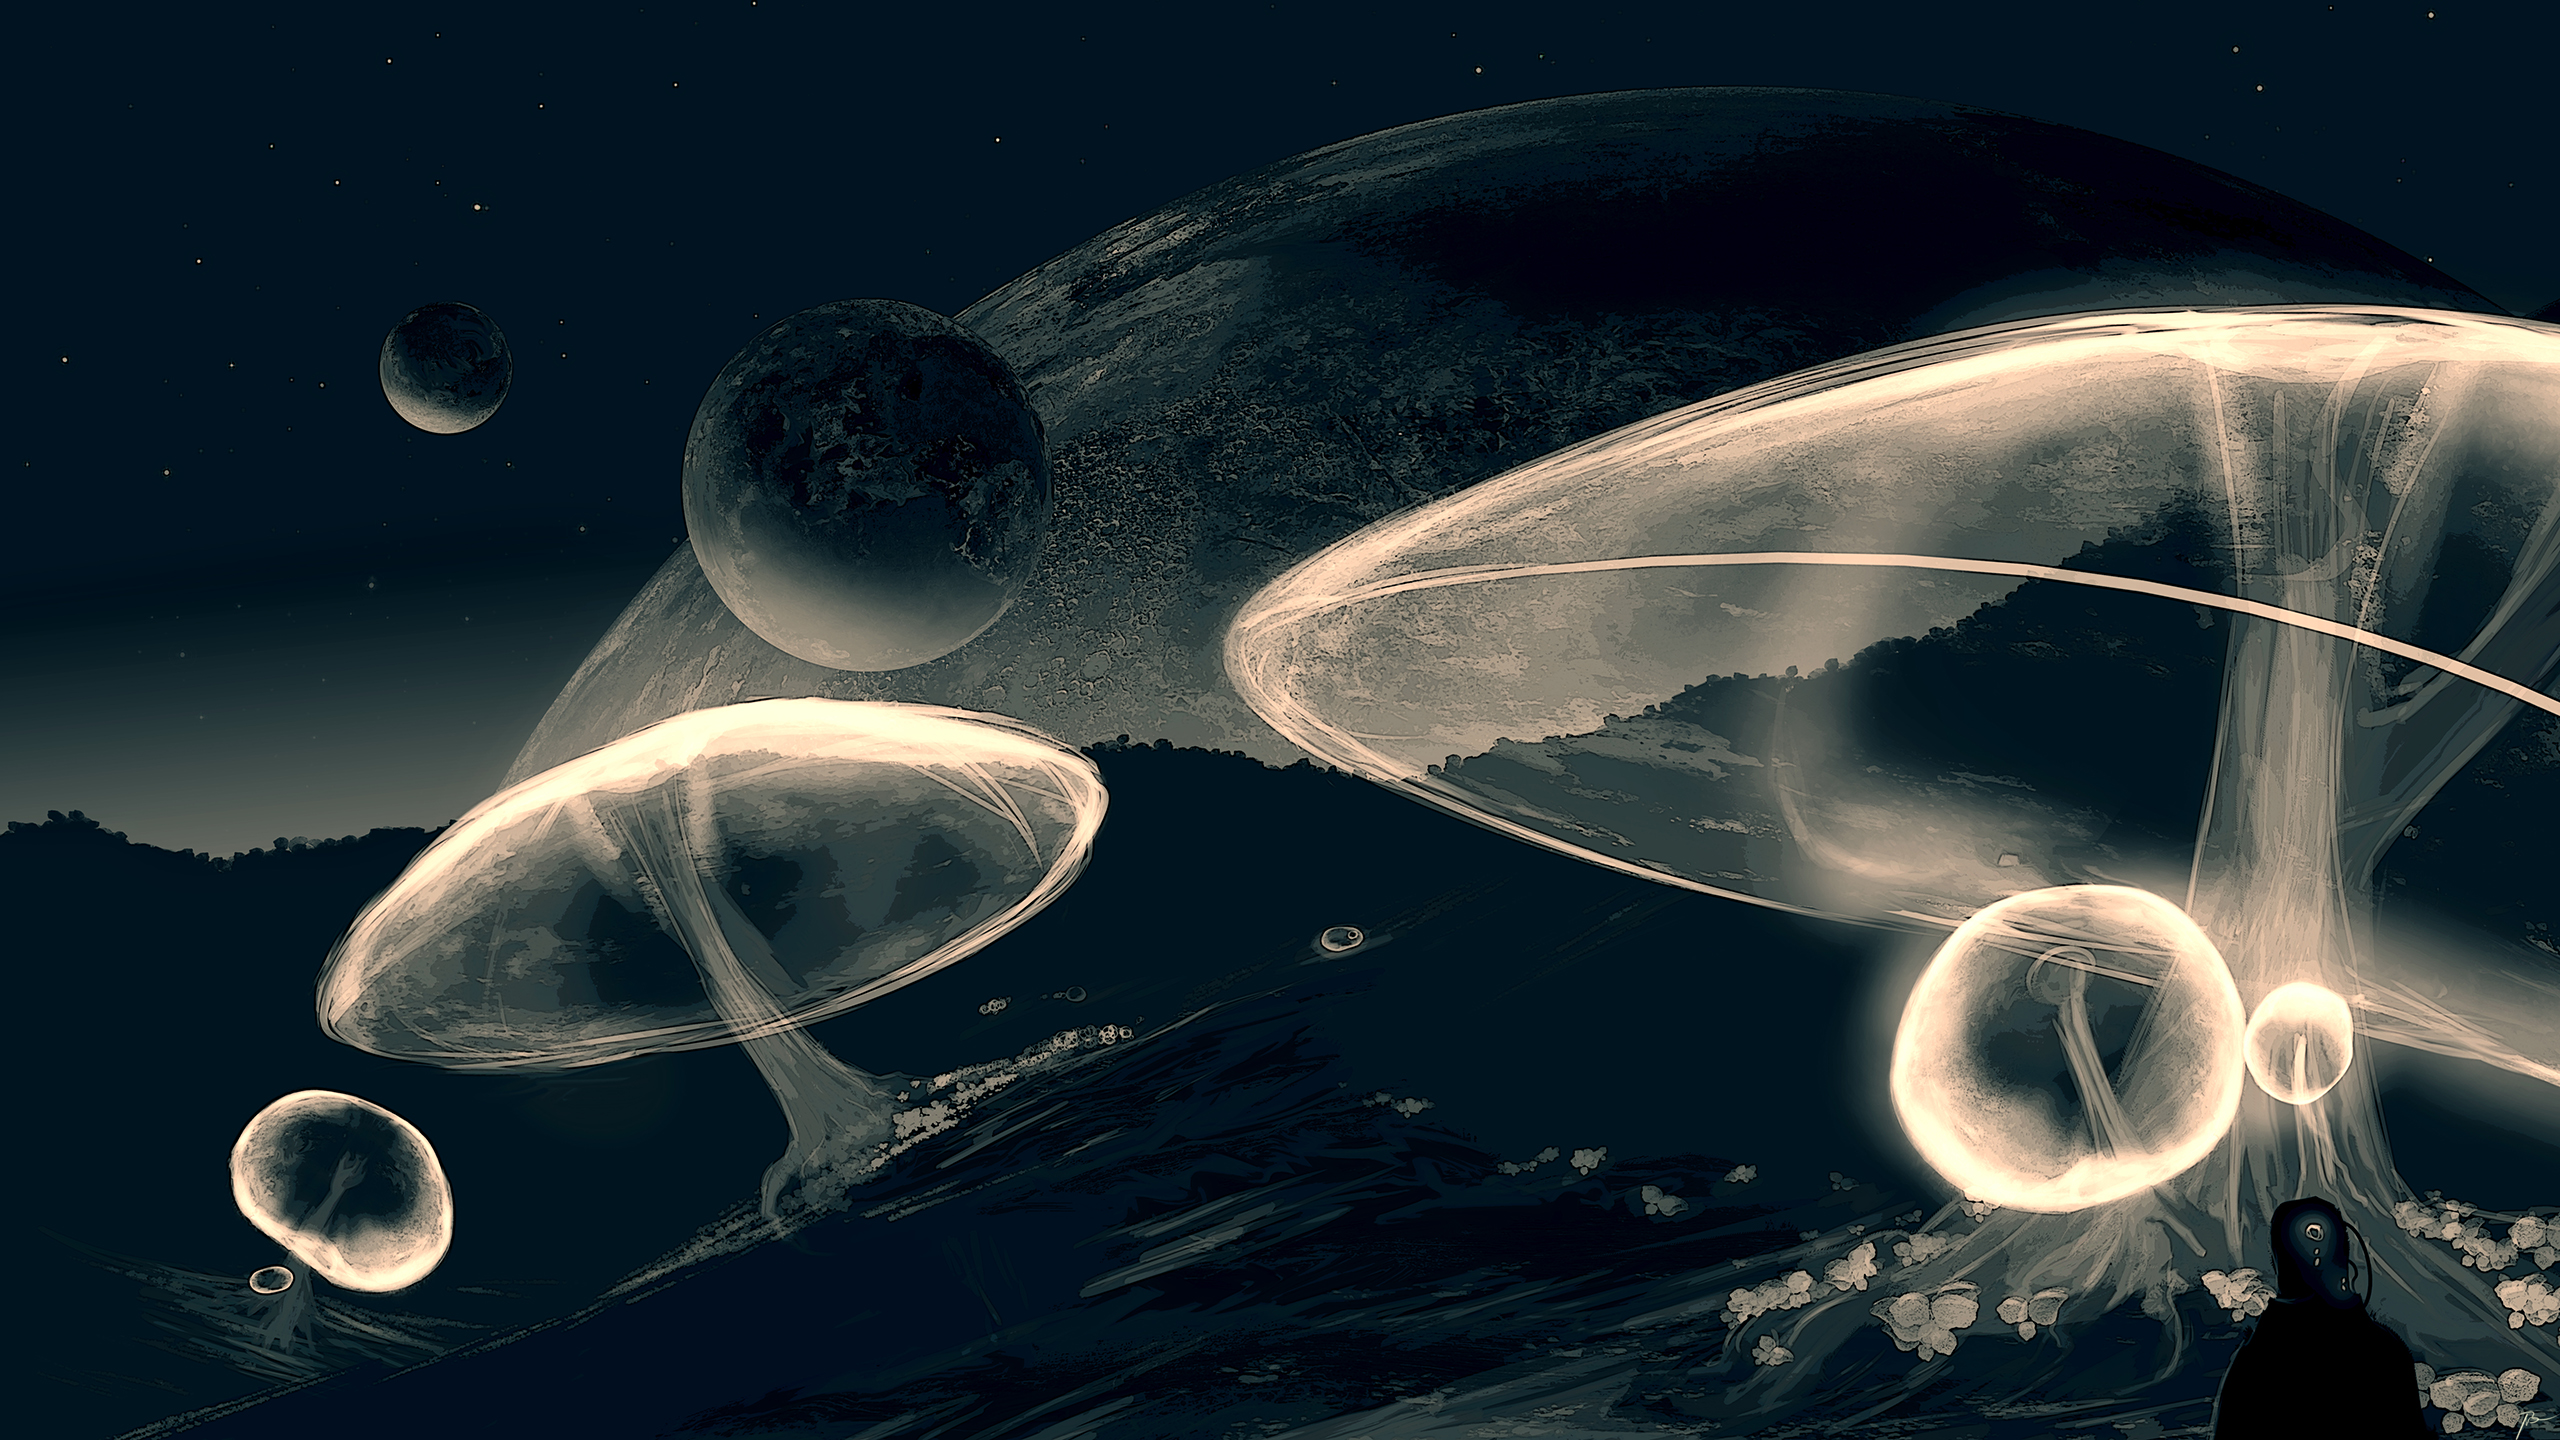 General 2560x1440 JoeyJazz dark mushroom science fiction space art digital art